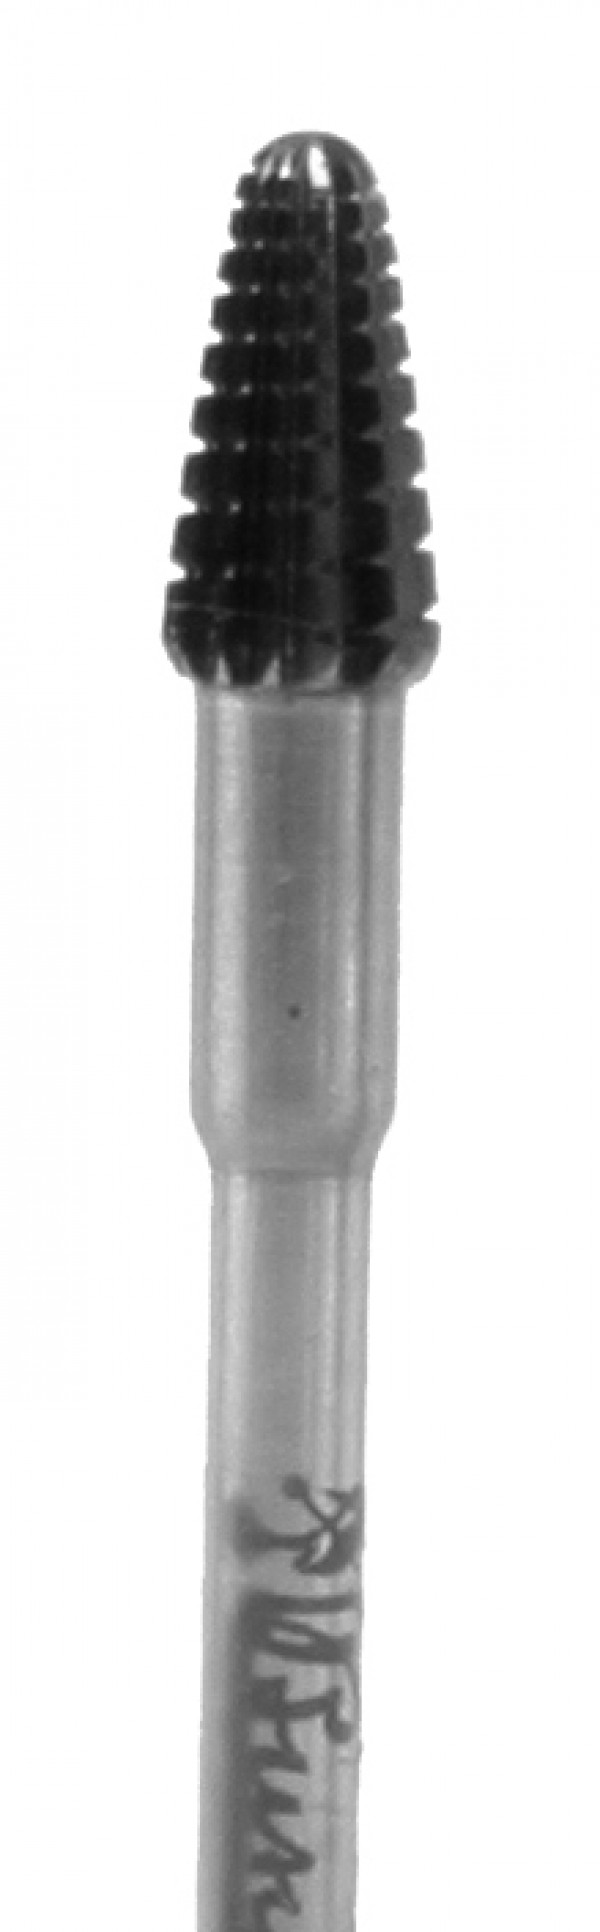 Karbiditerä, pisara karkea ristirihla 4 mm